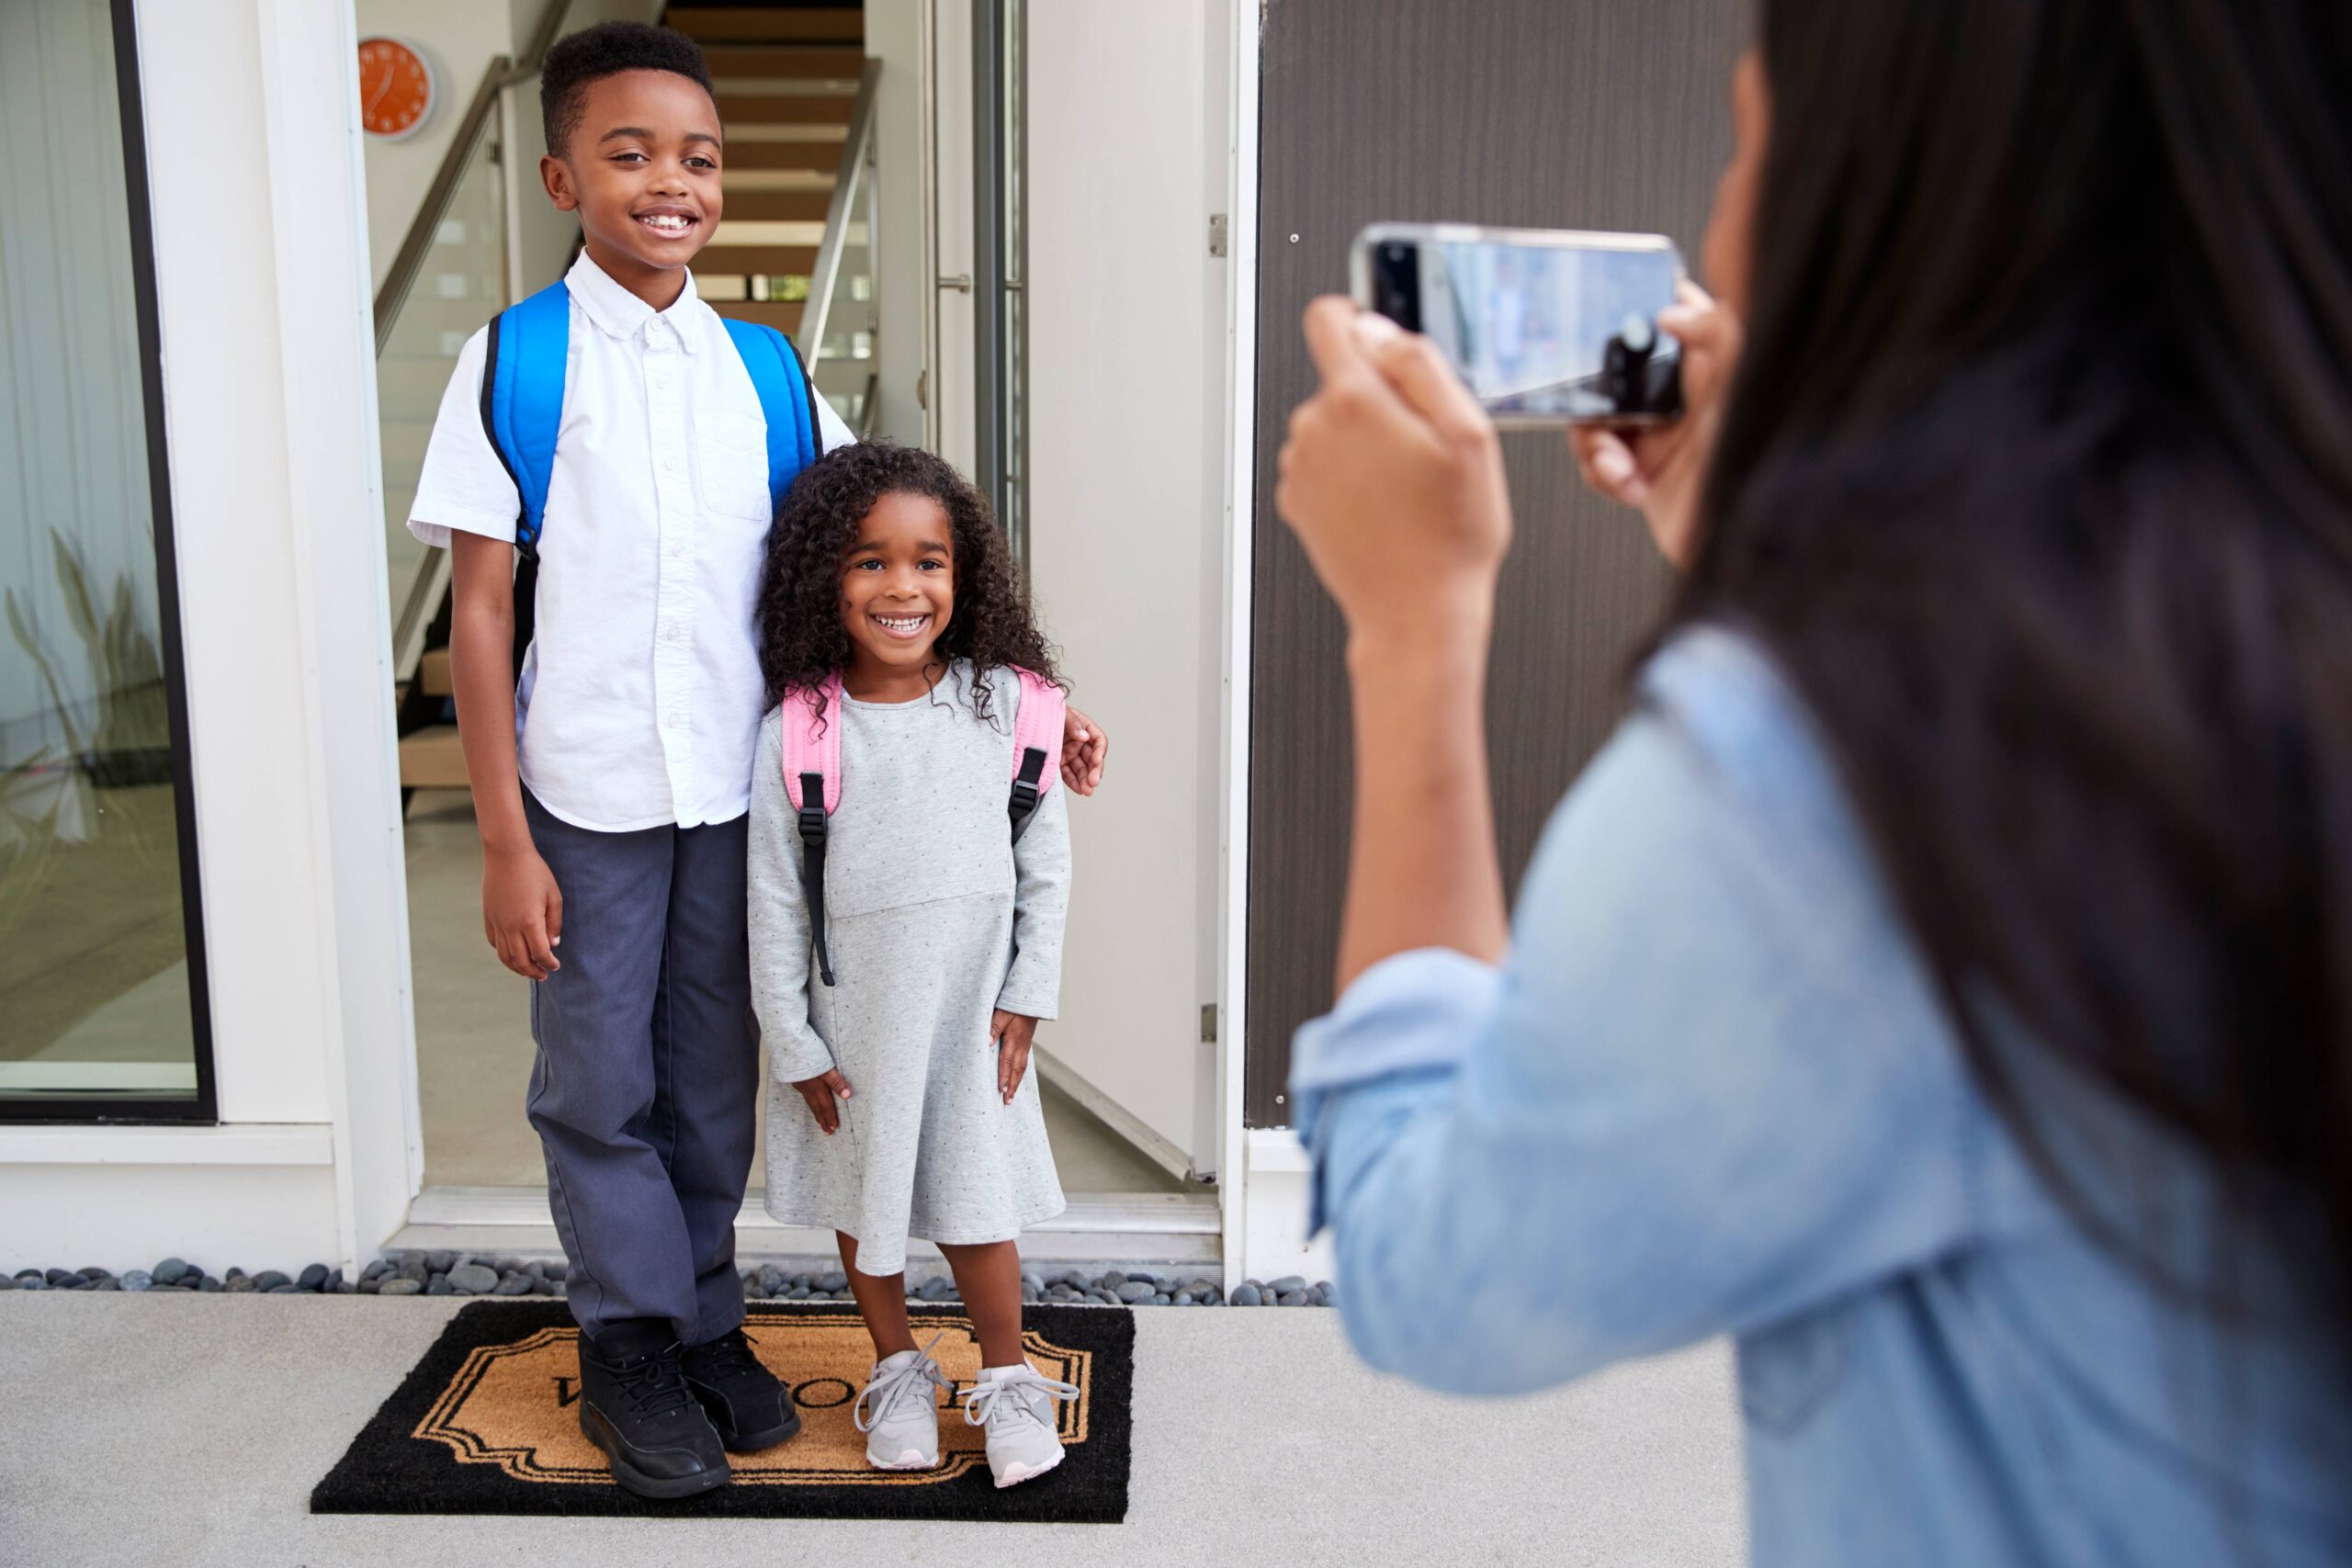 Digital Expert on the Risks of Sharing School Photos Online